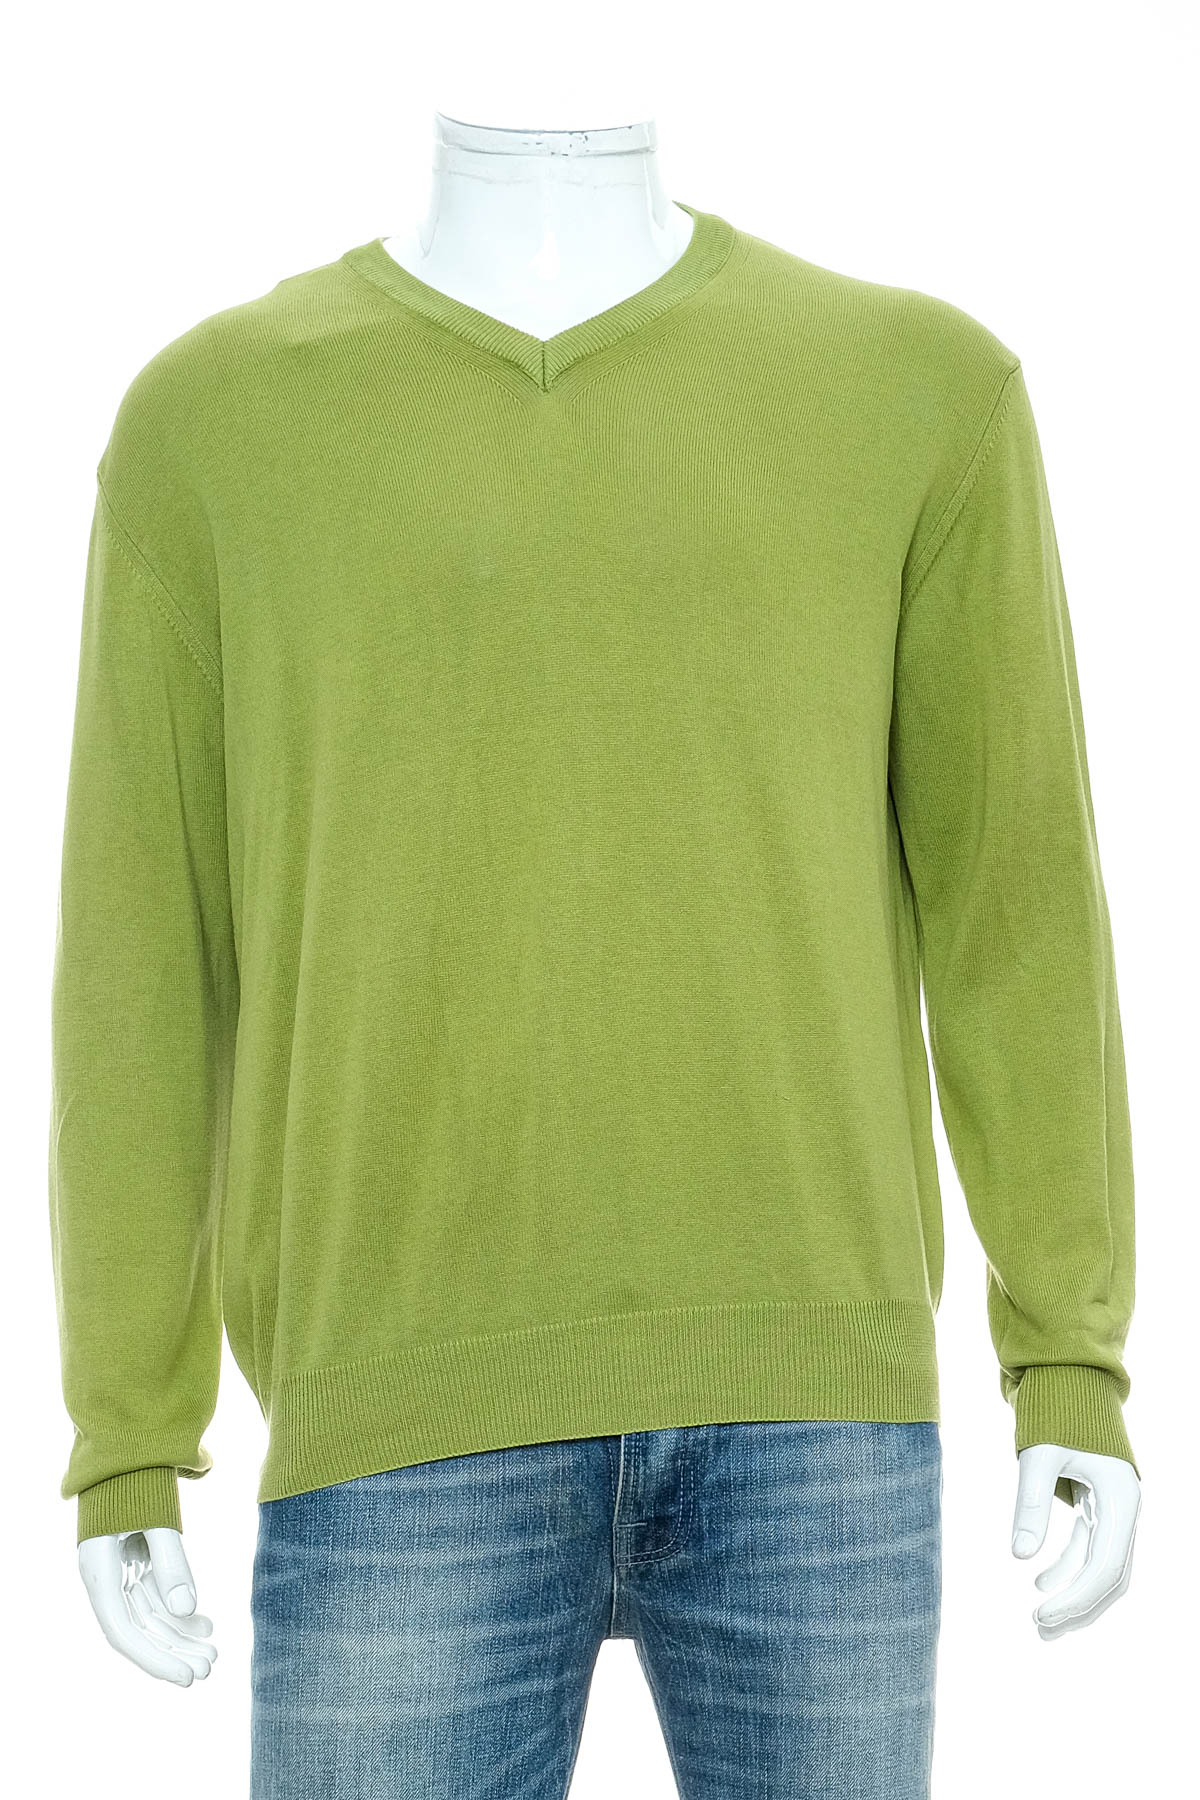 Men's sweater - Engbers - 0